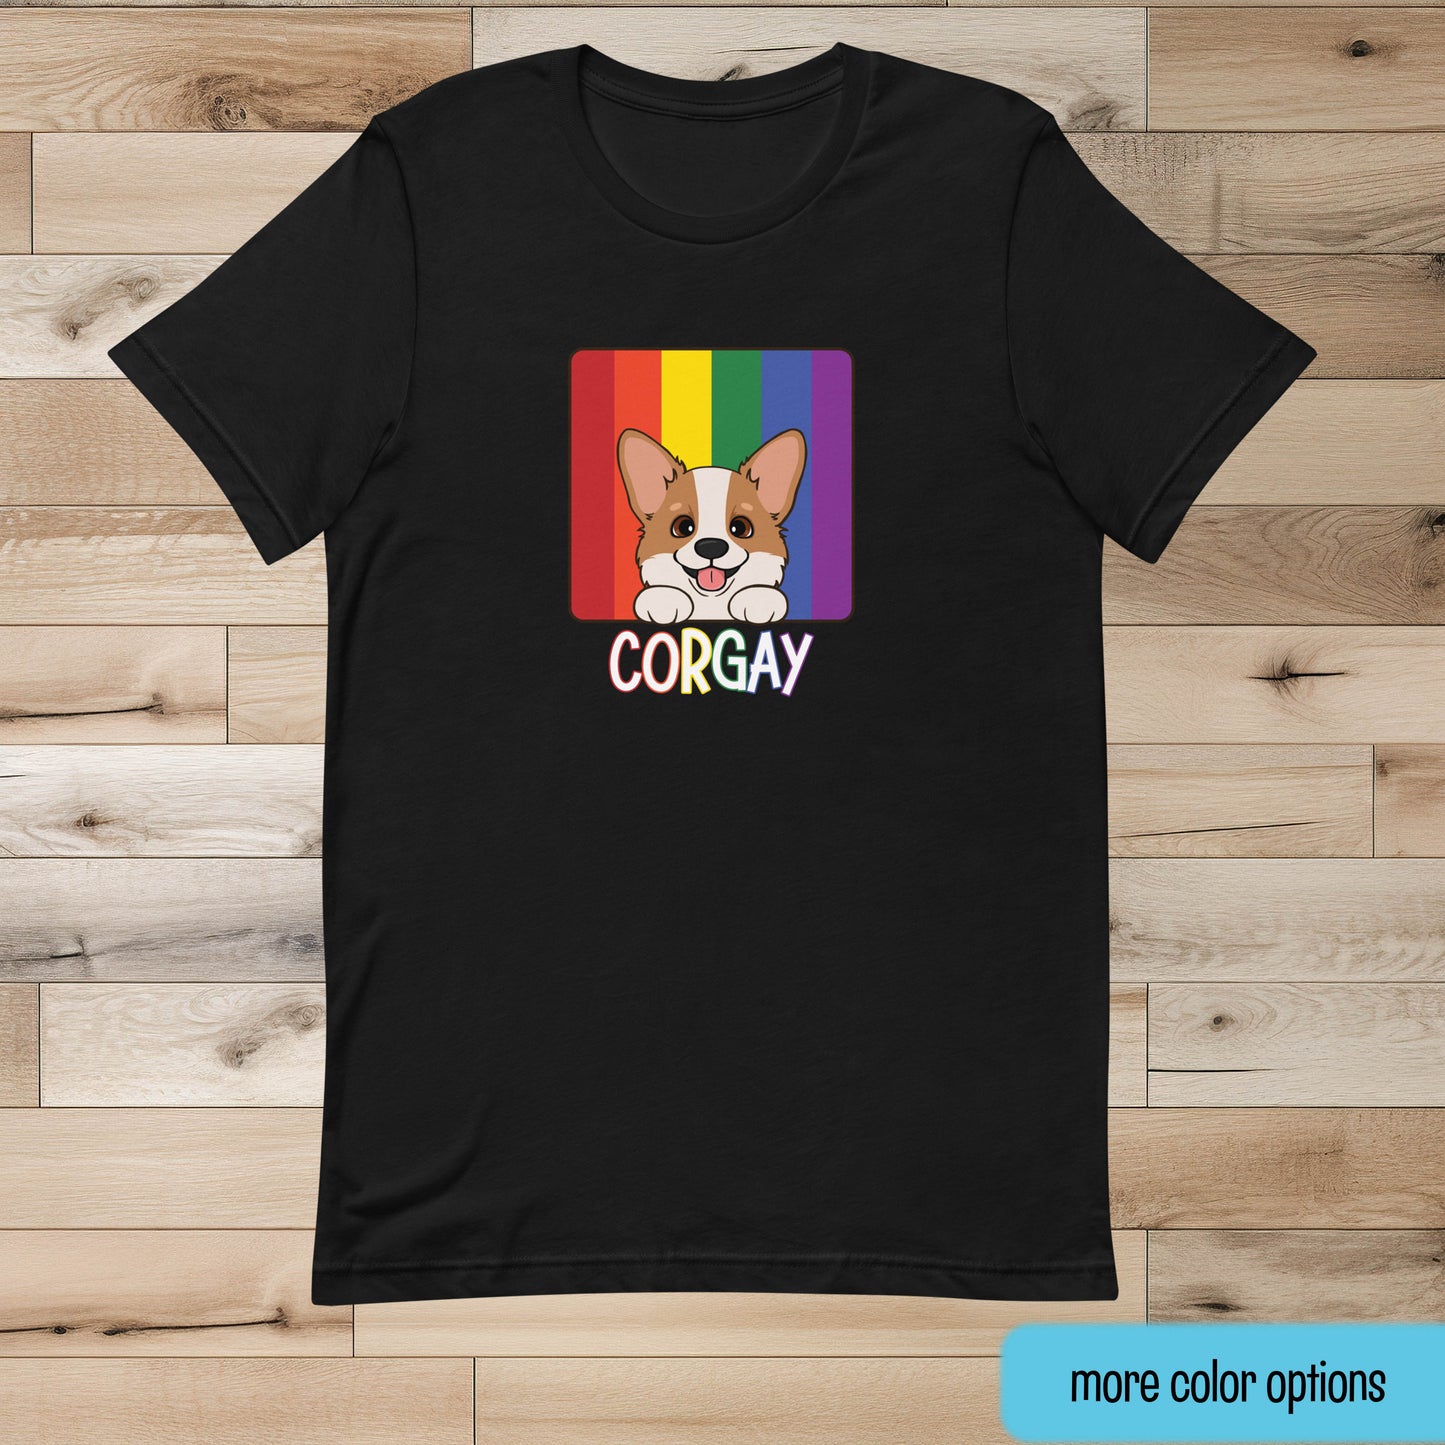 Corgay Unisex T-shirt